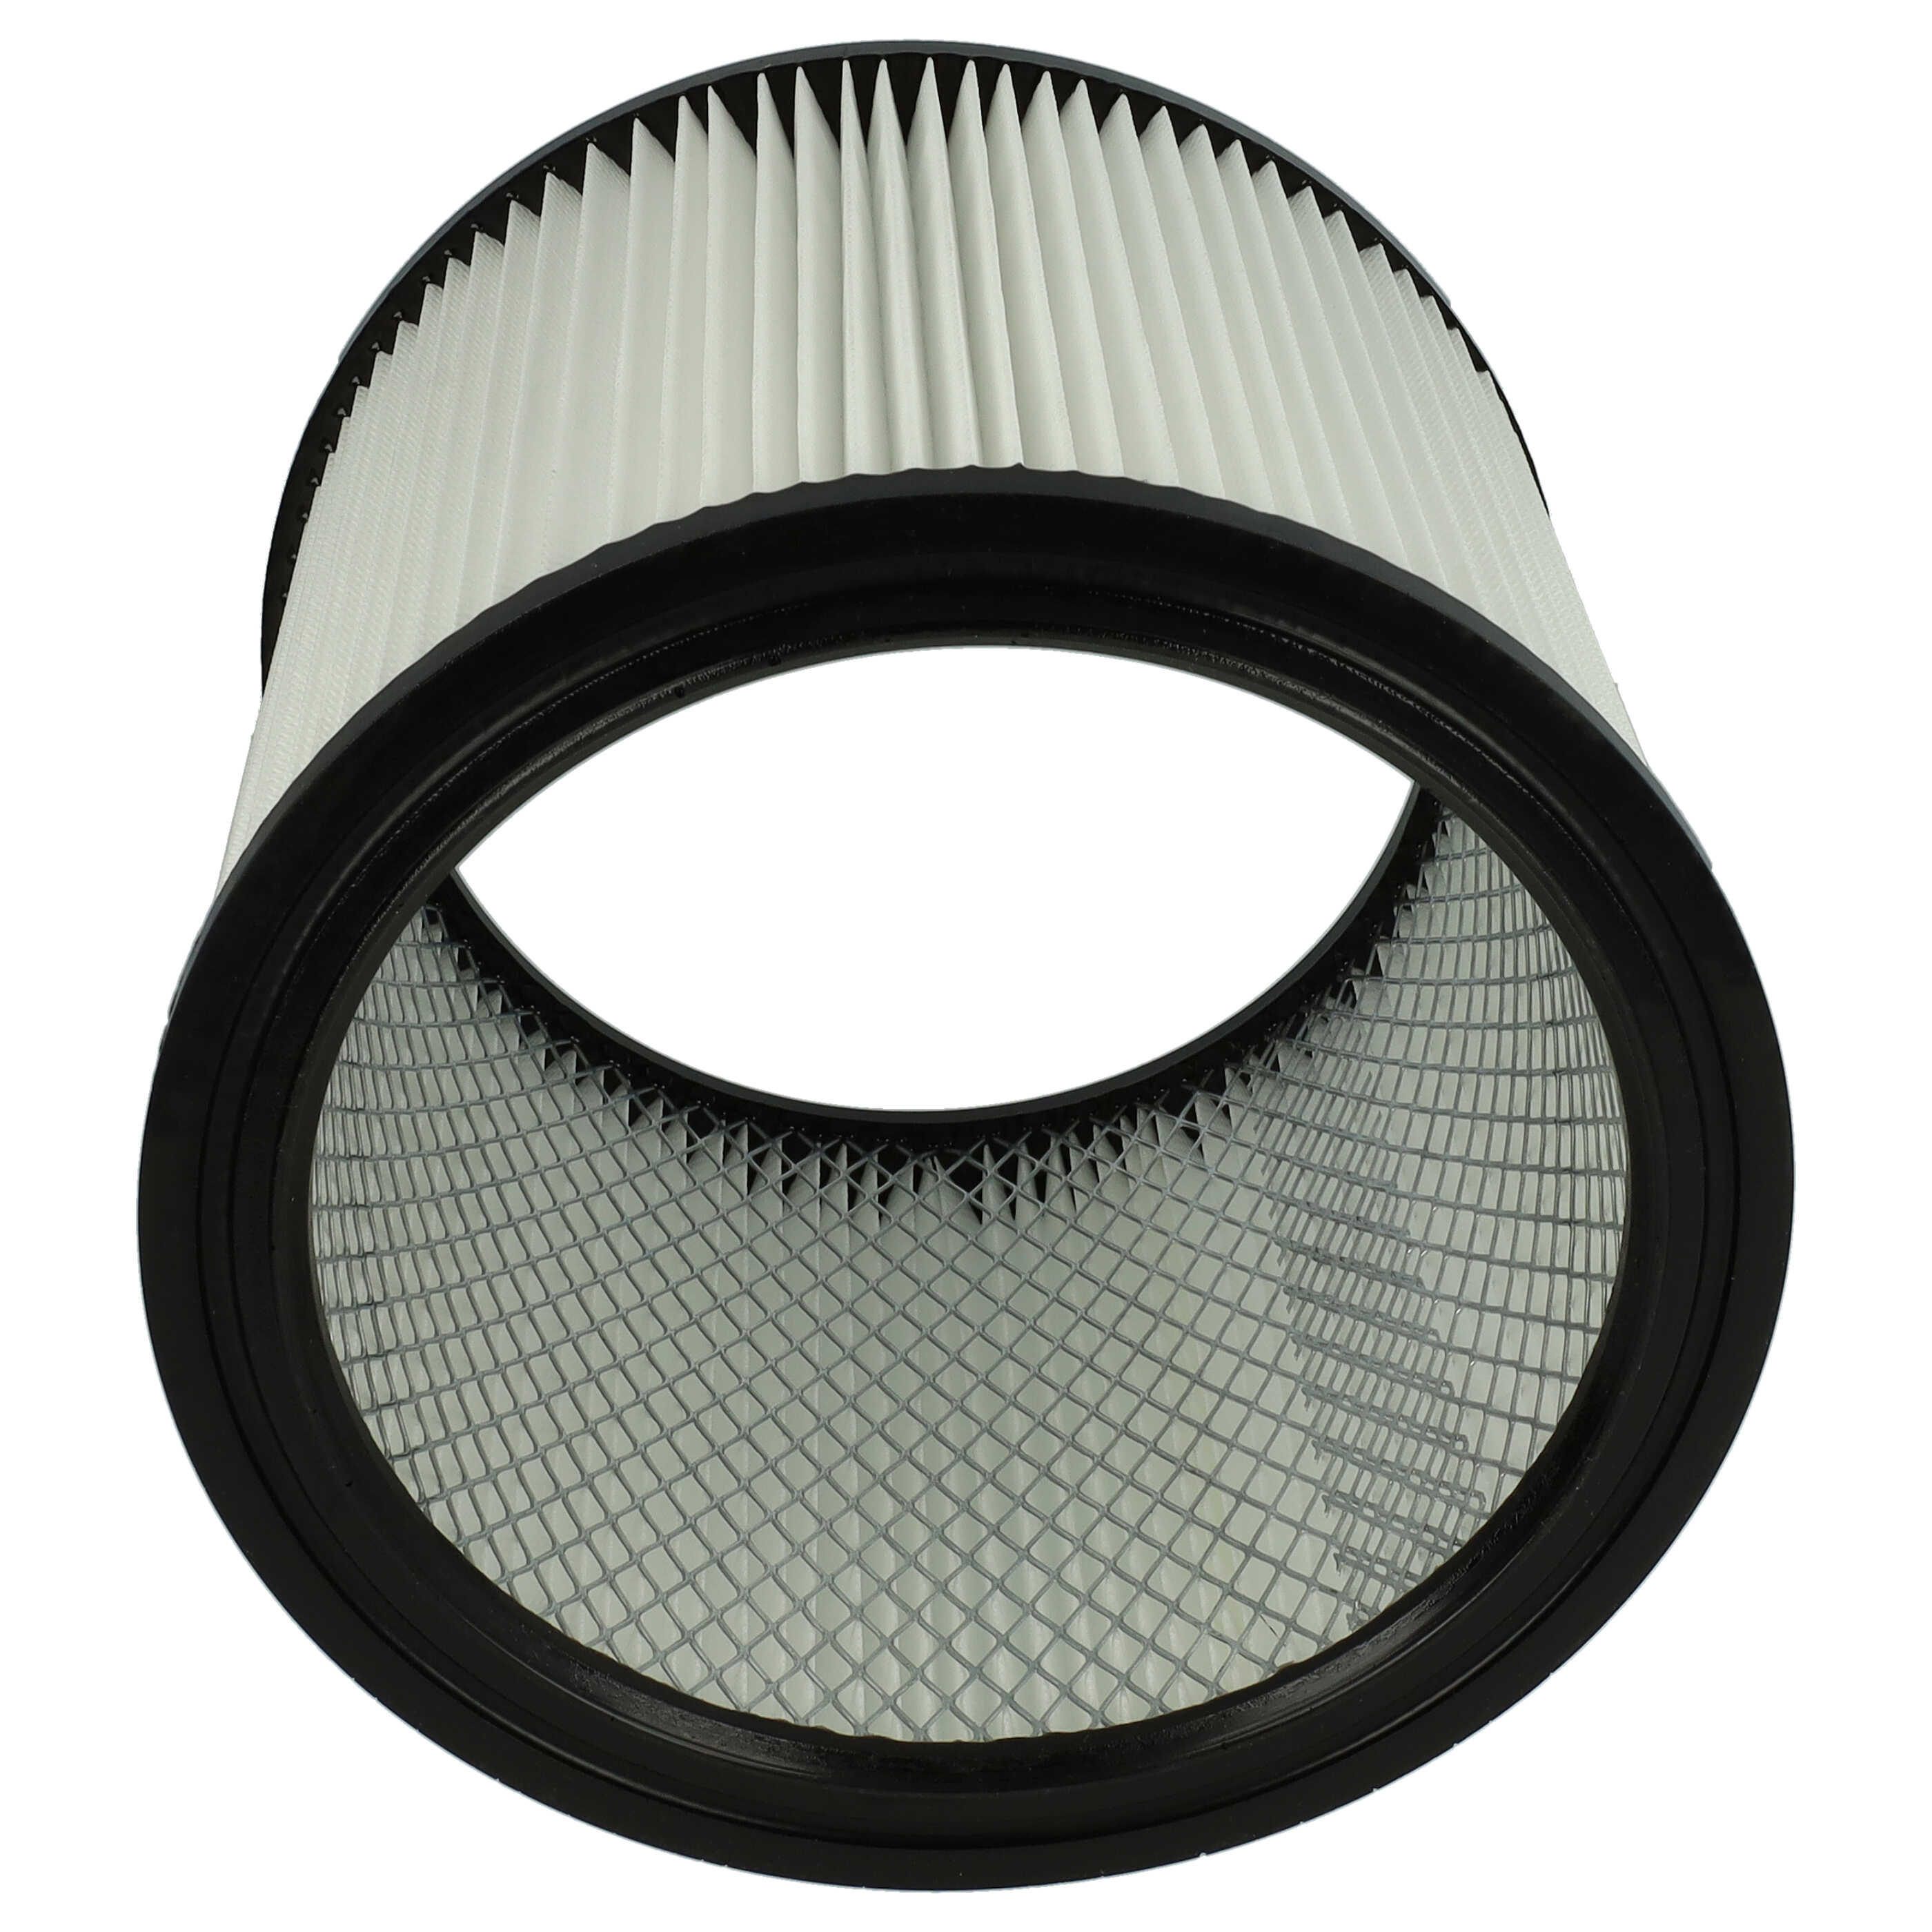 1x Filter replaces ShopVac 90304, 126282903041, 903-04, 026282290038 for ShopVac Vacuum Cleaner, black / white